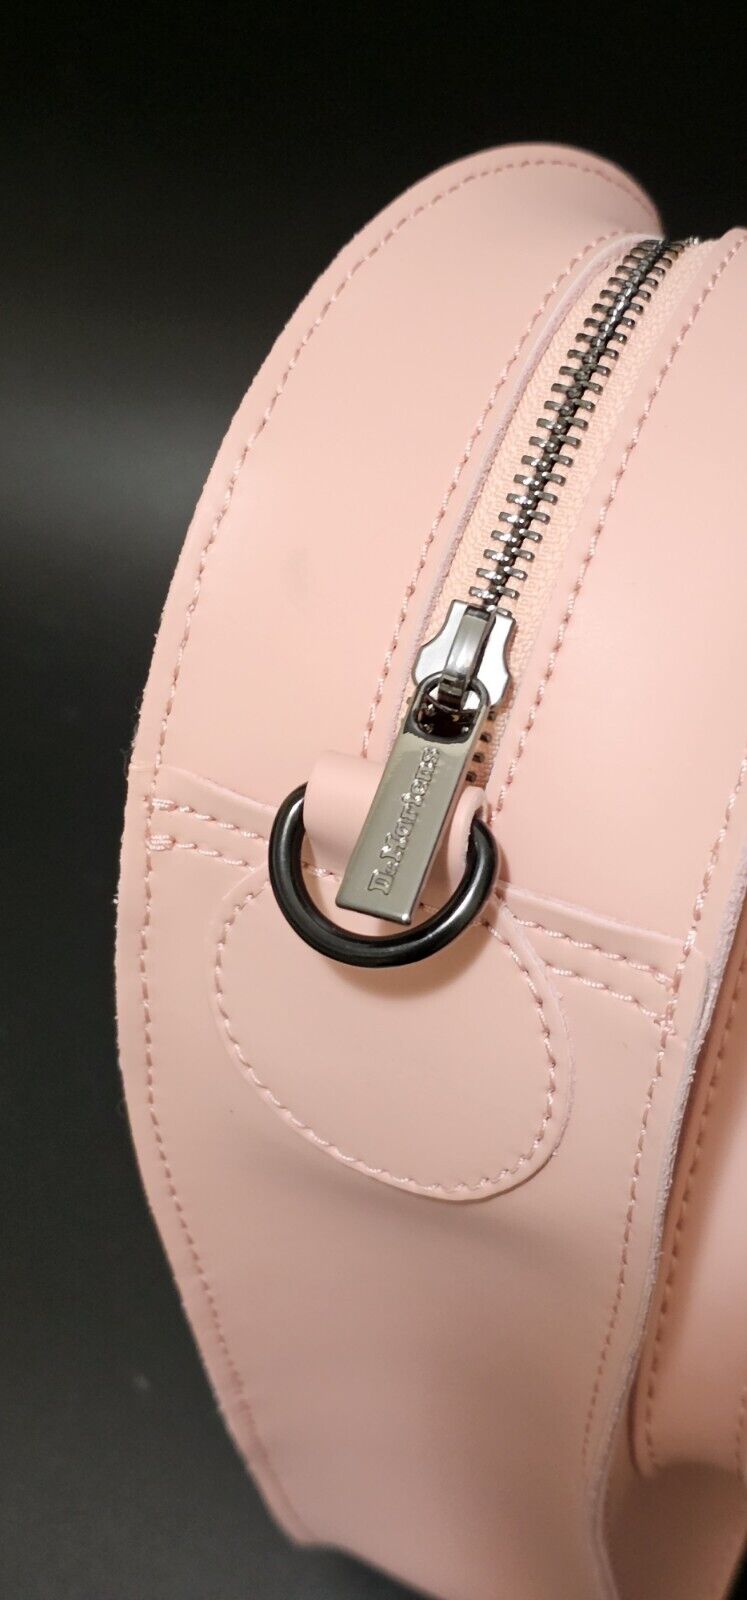 Dr. Martens Heart Shaped Leather Backpack Cross Bag Handbag Purse